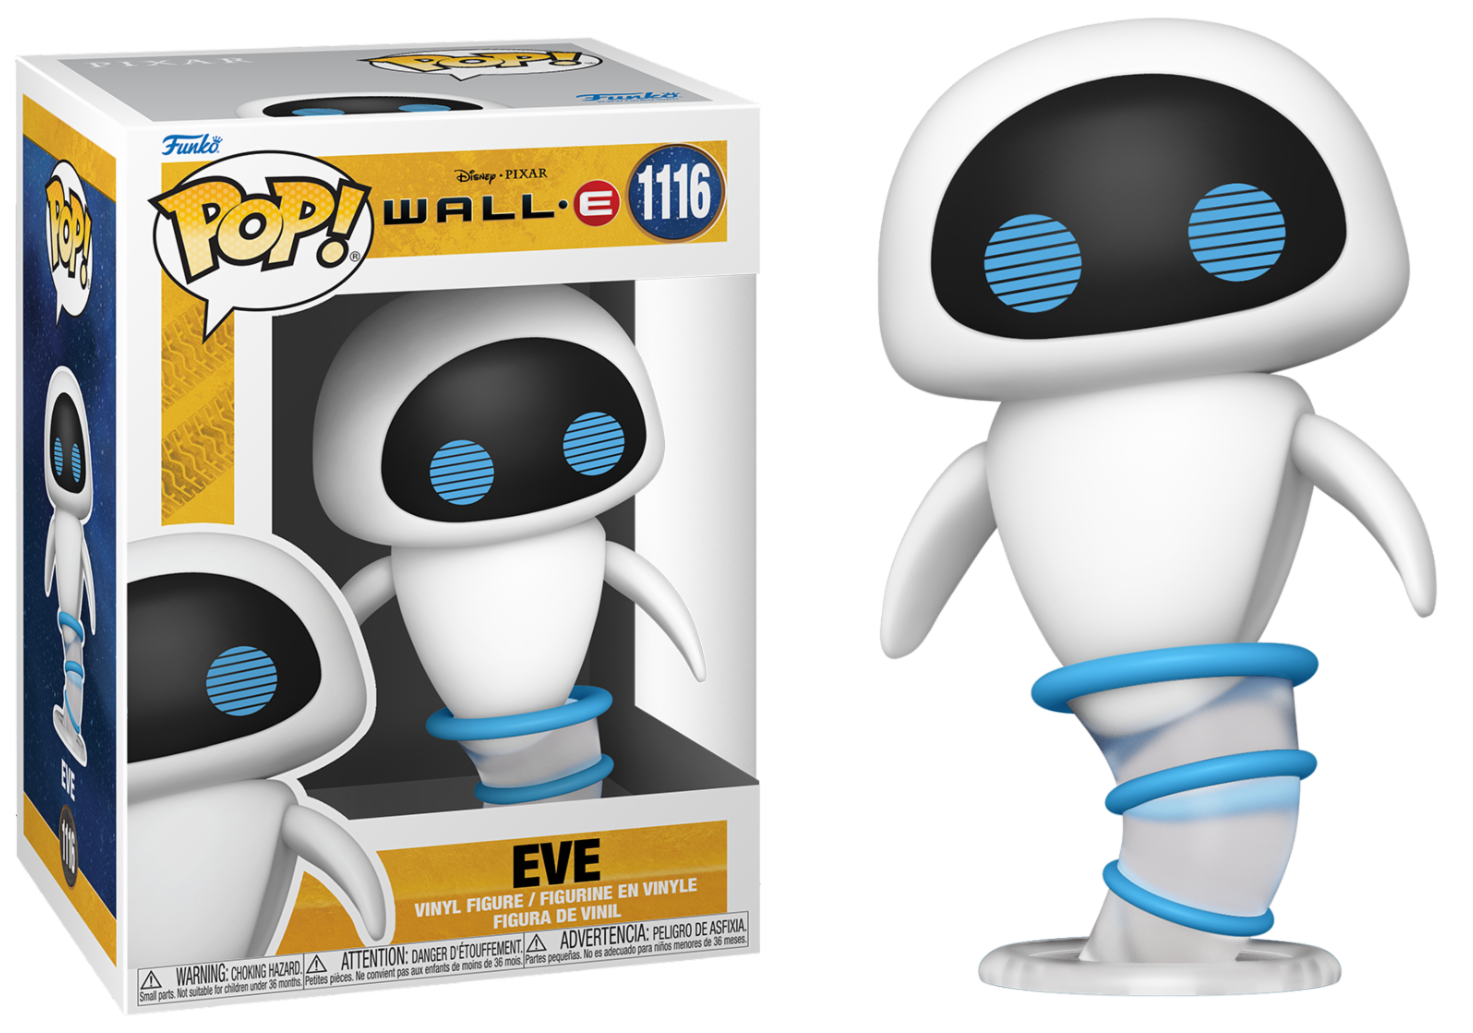 Wall-E POP! Movies Vinyl Figure Eve Flying 9 cm